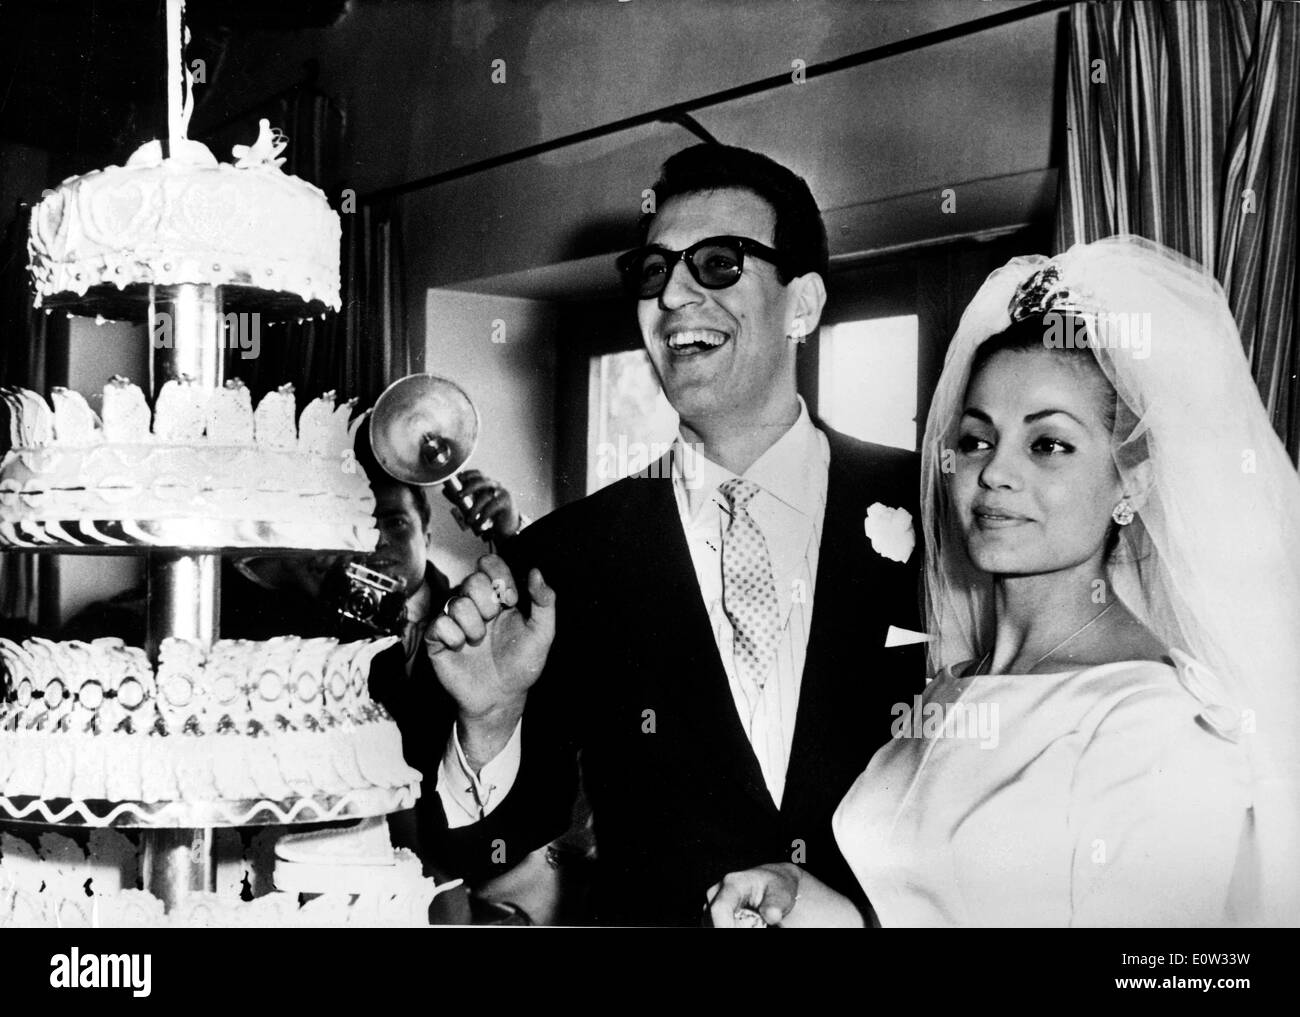 Carmen Sevilla and Augusto Alguero cutting the wedding cake Stock Photo